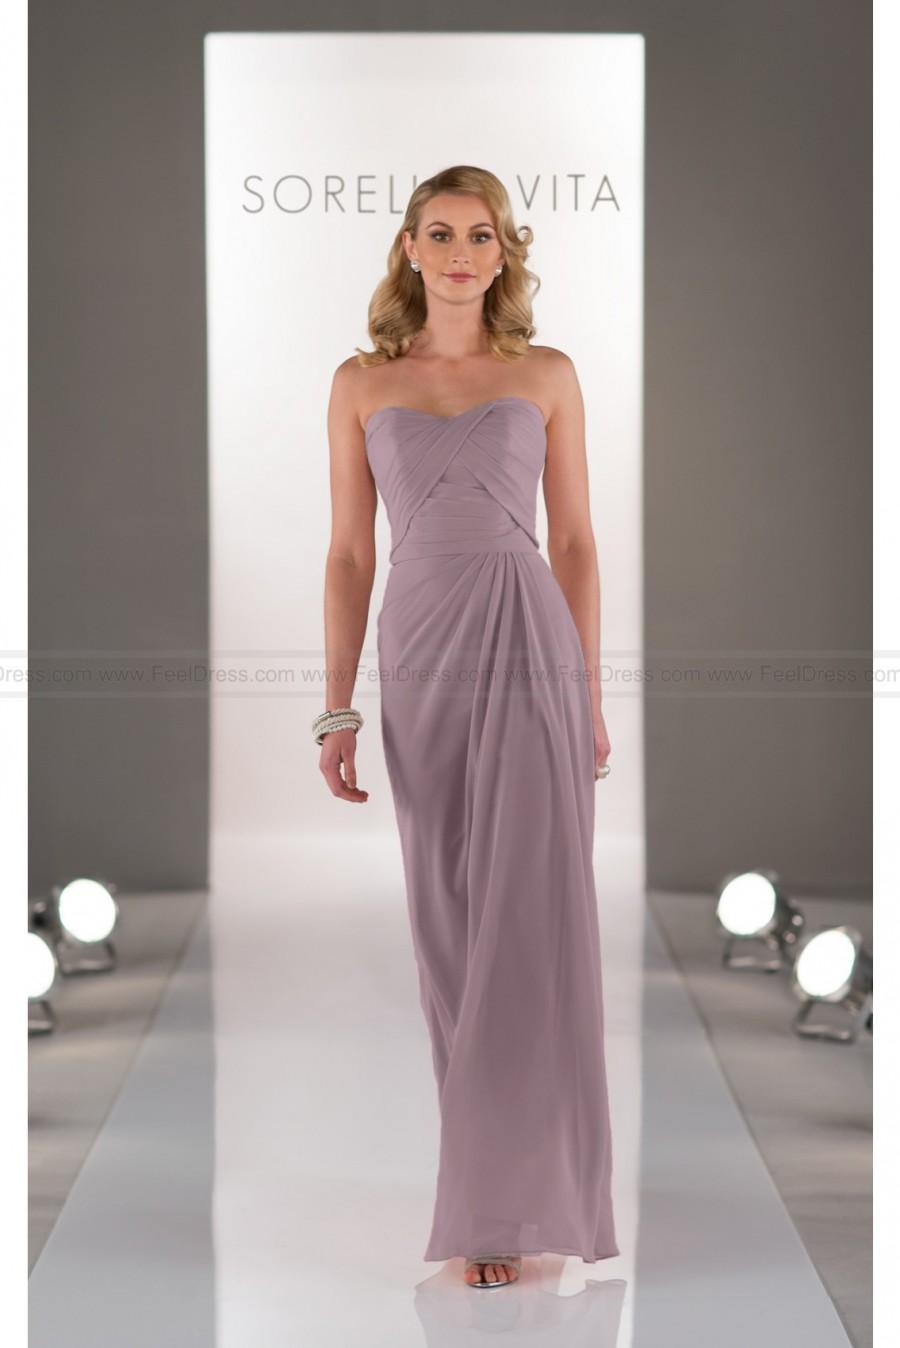 Mariage - Sorella Vita Long Chiffon Bridesmaid Dress Style 8416